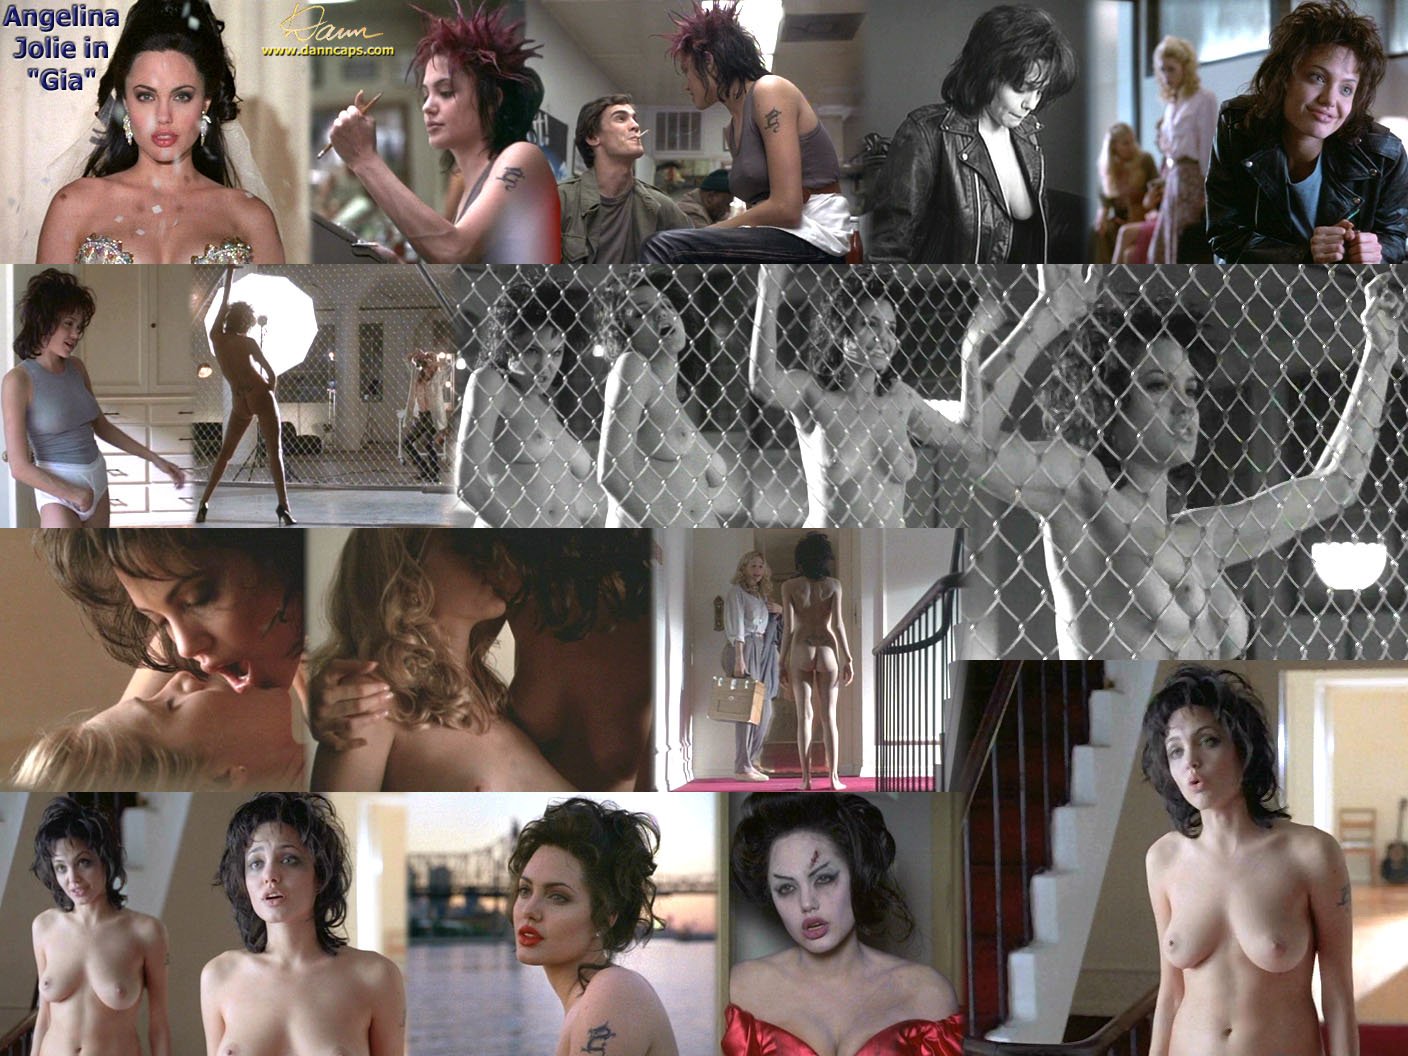 Angelina jolie gia nude scene